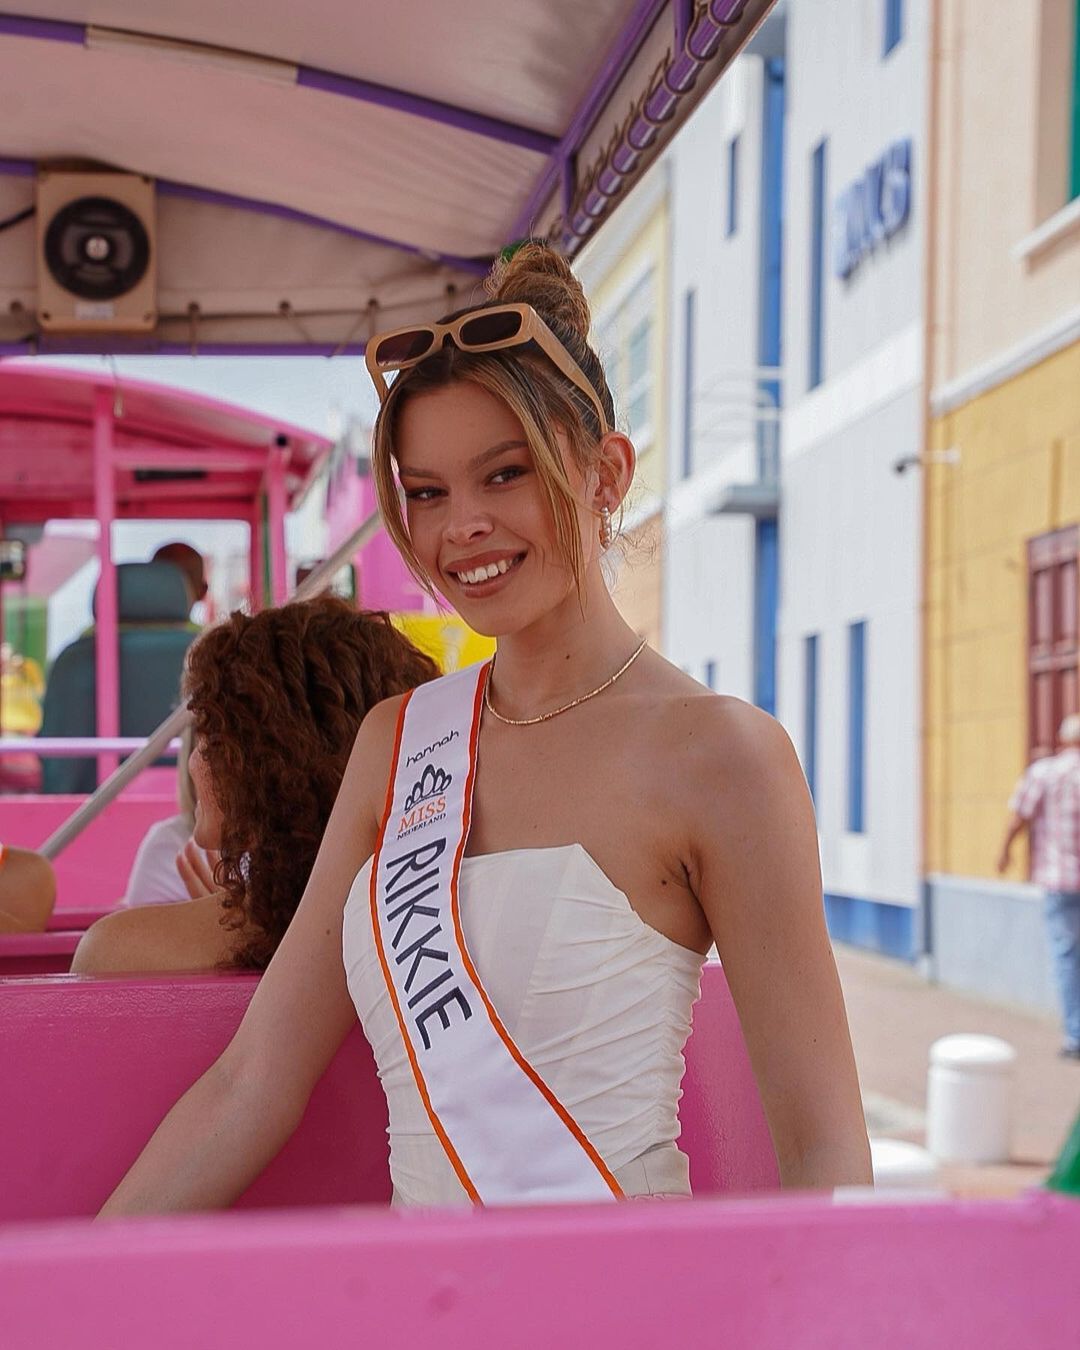 Transgender contestant, Rikkie Kollé, for Miss Netherlands poses for a picture.